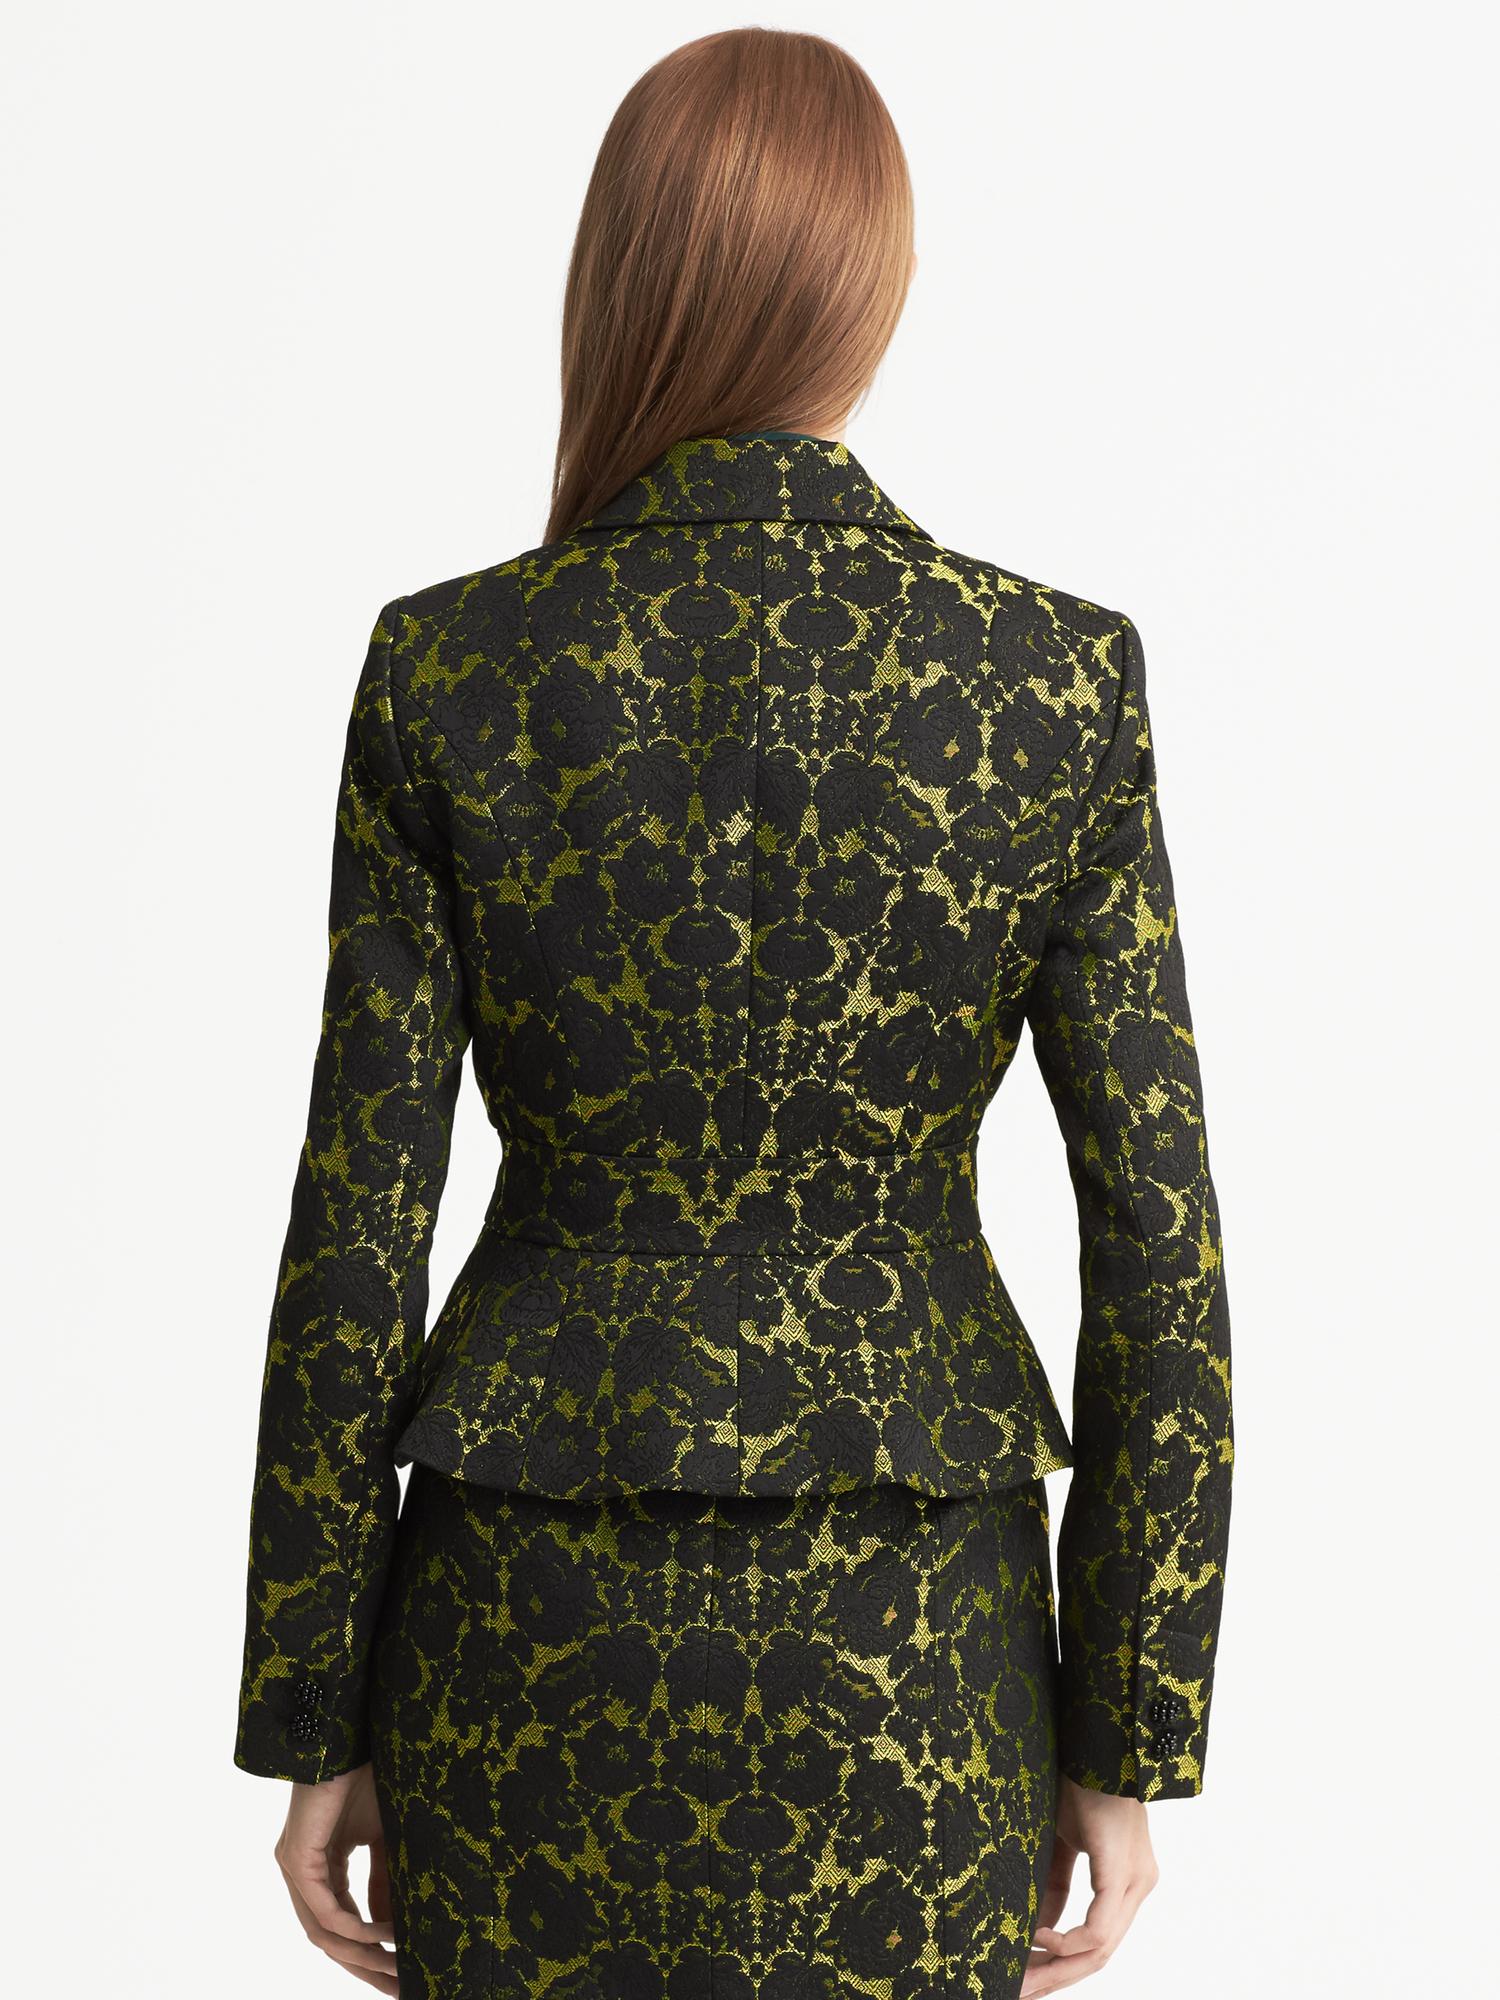 L'Wren Scott Collection Lace Brocade Jacket